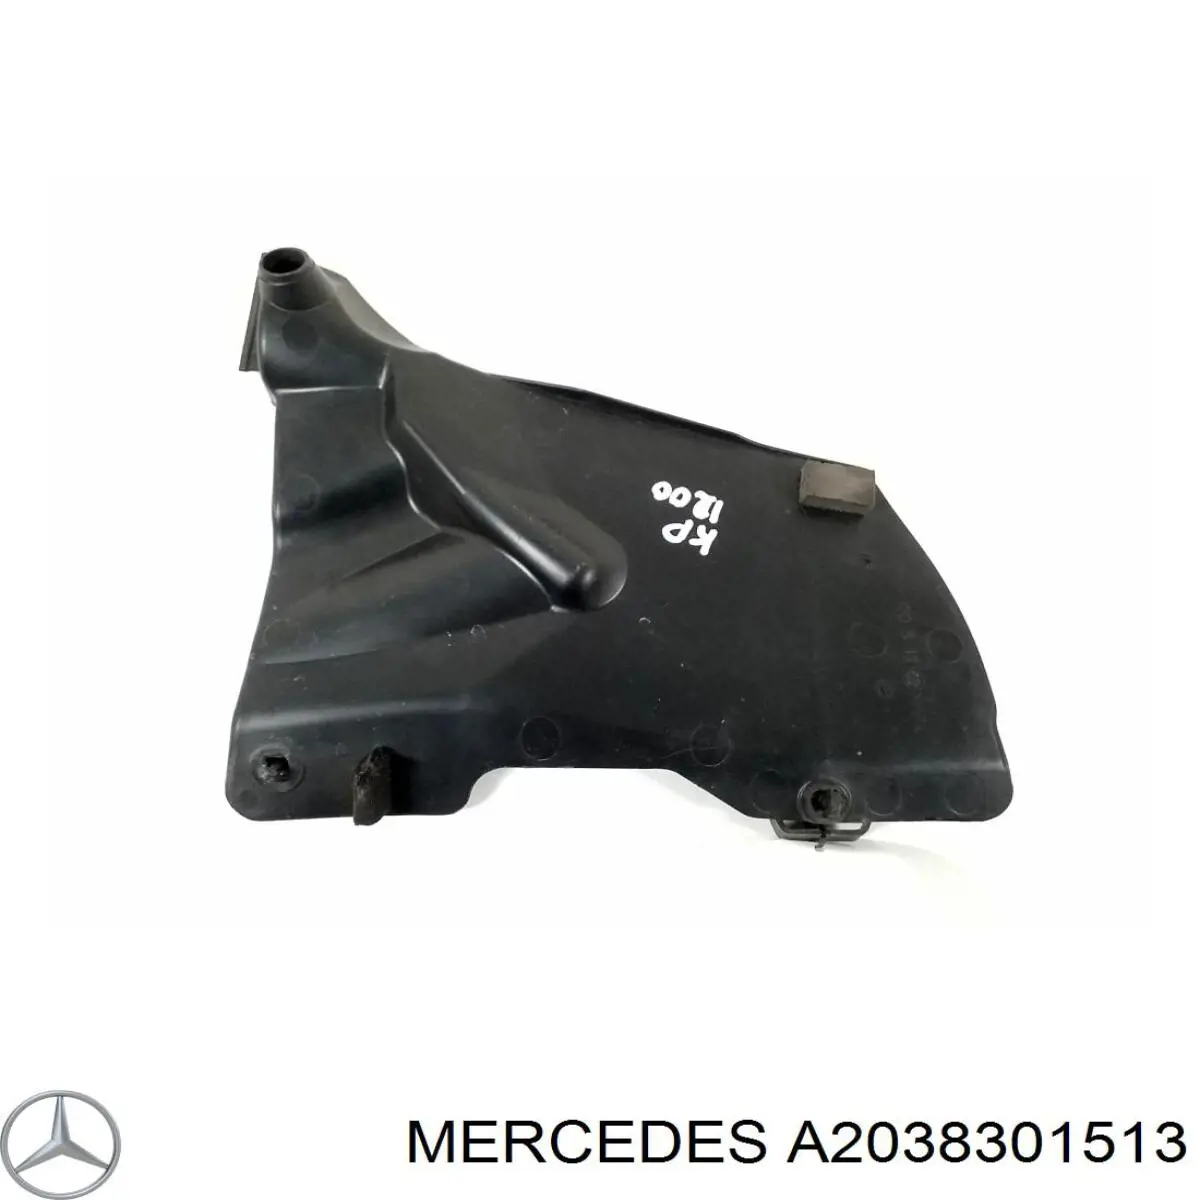 2038301513 Mercedes